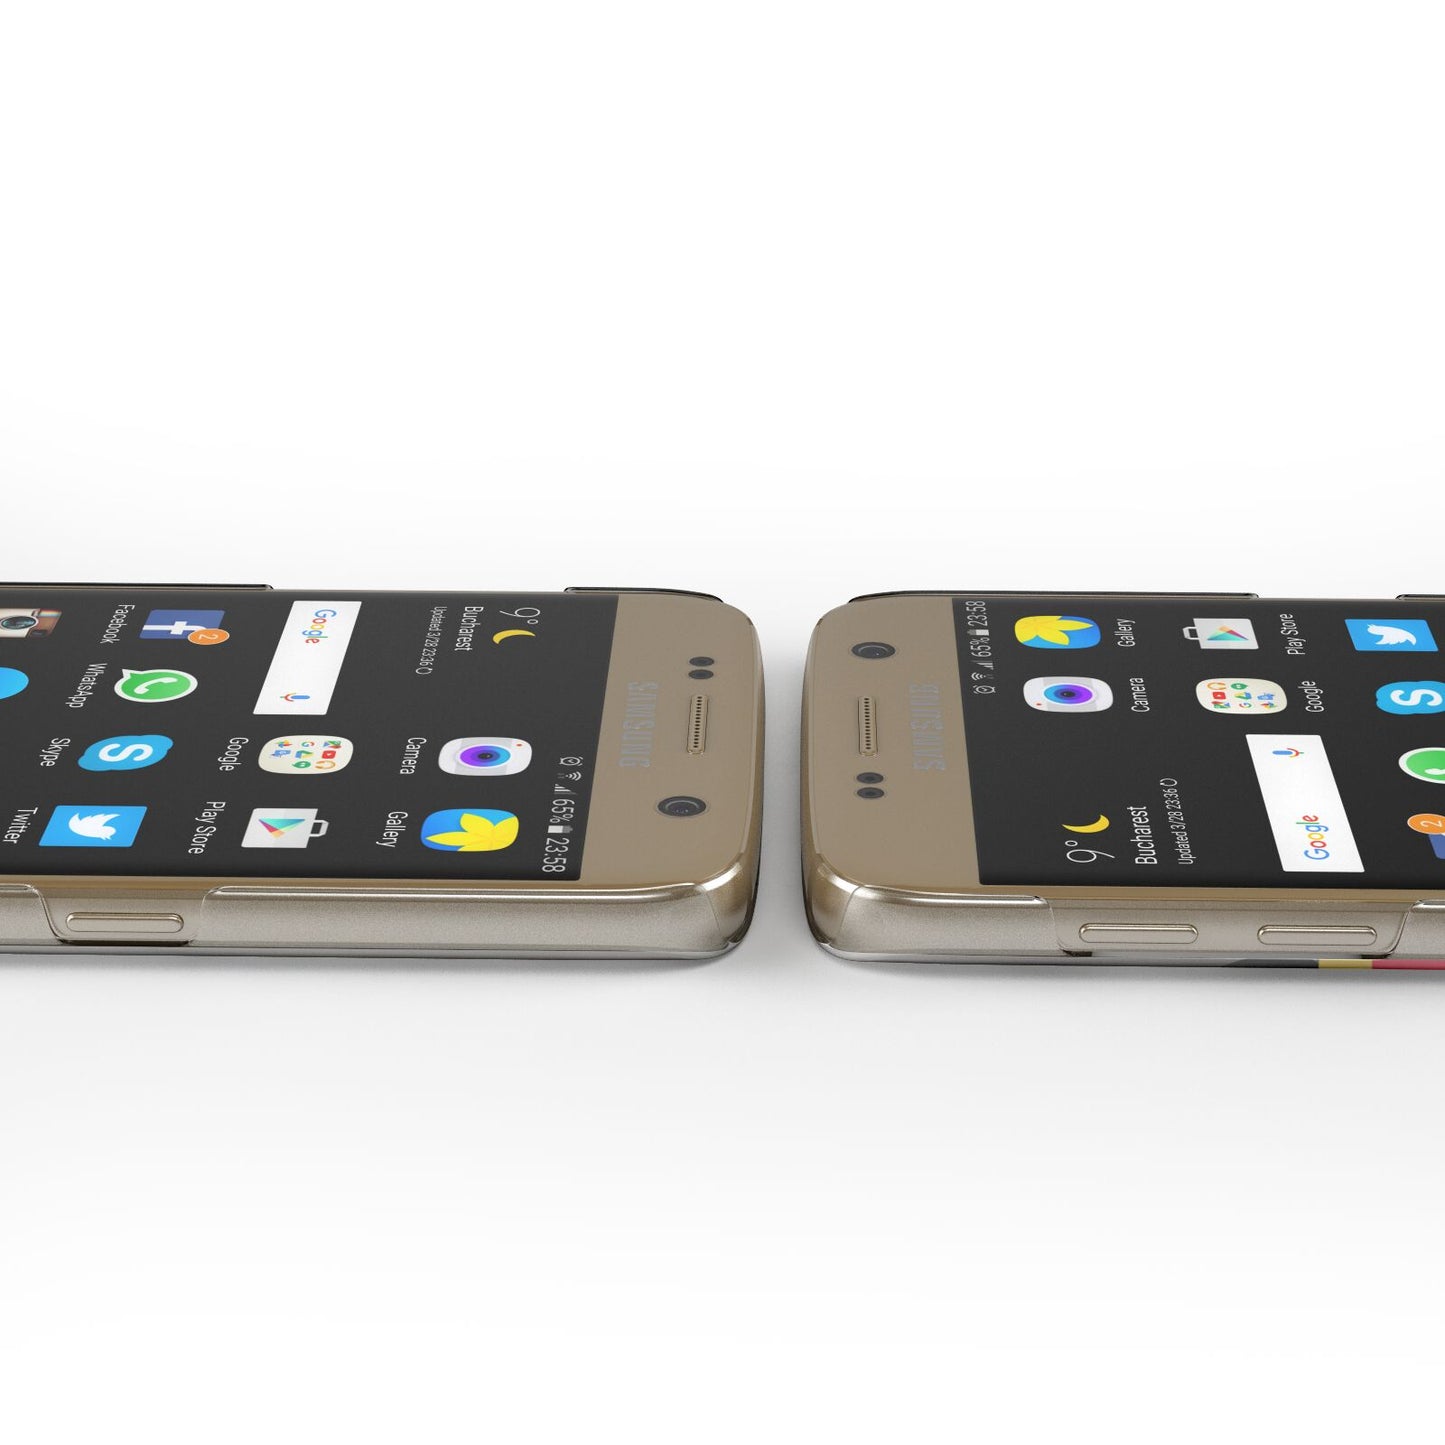 The Nutcracker Samsung Galaxy Case Ports Cutout